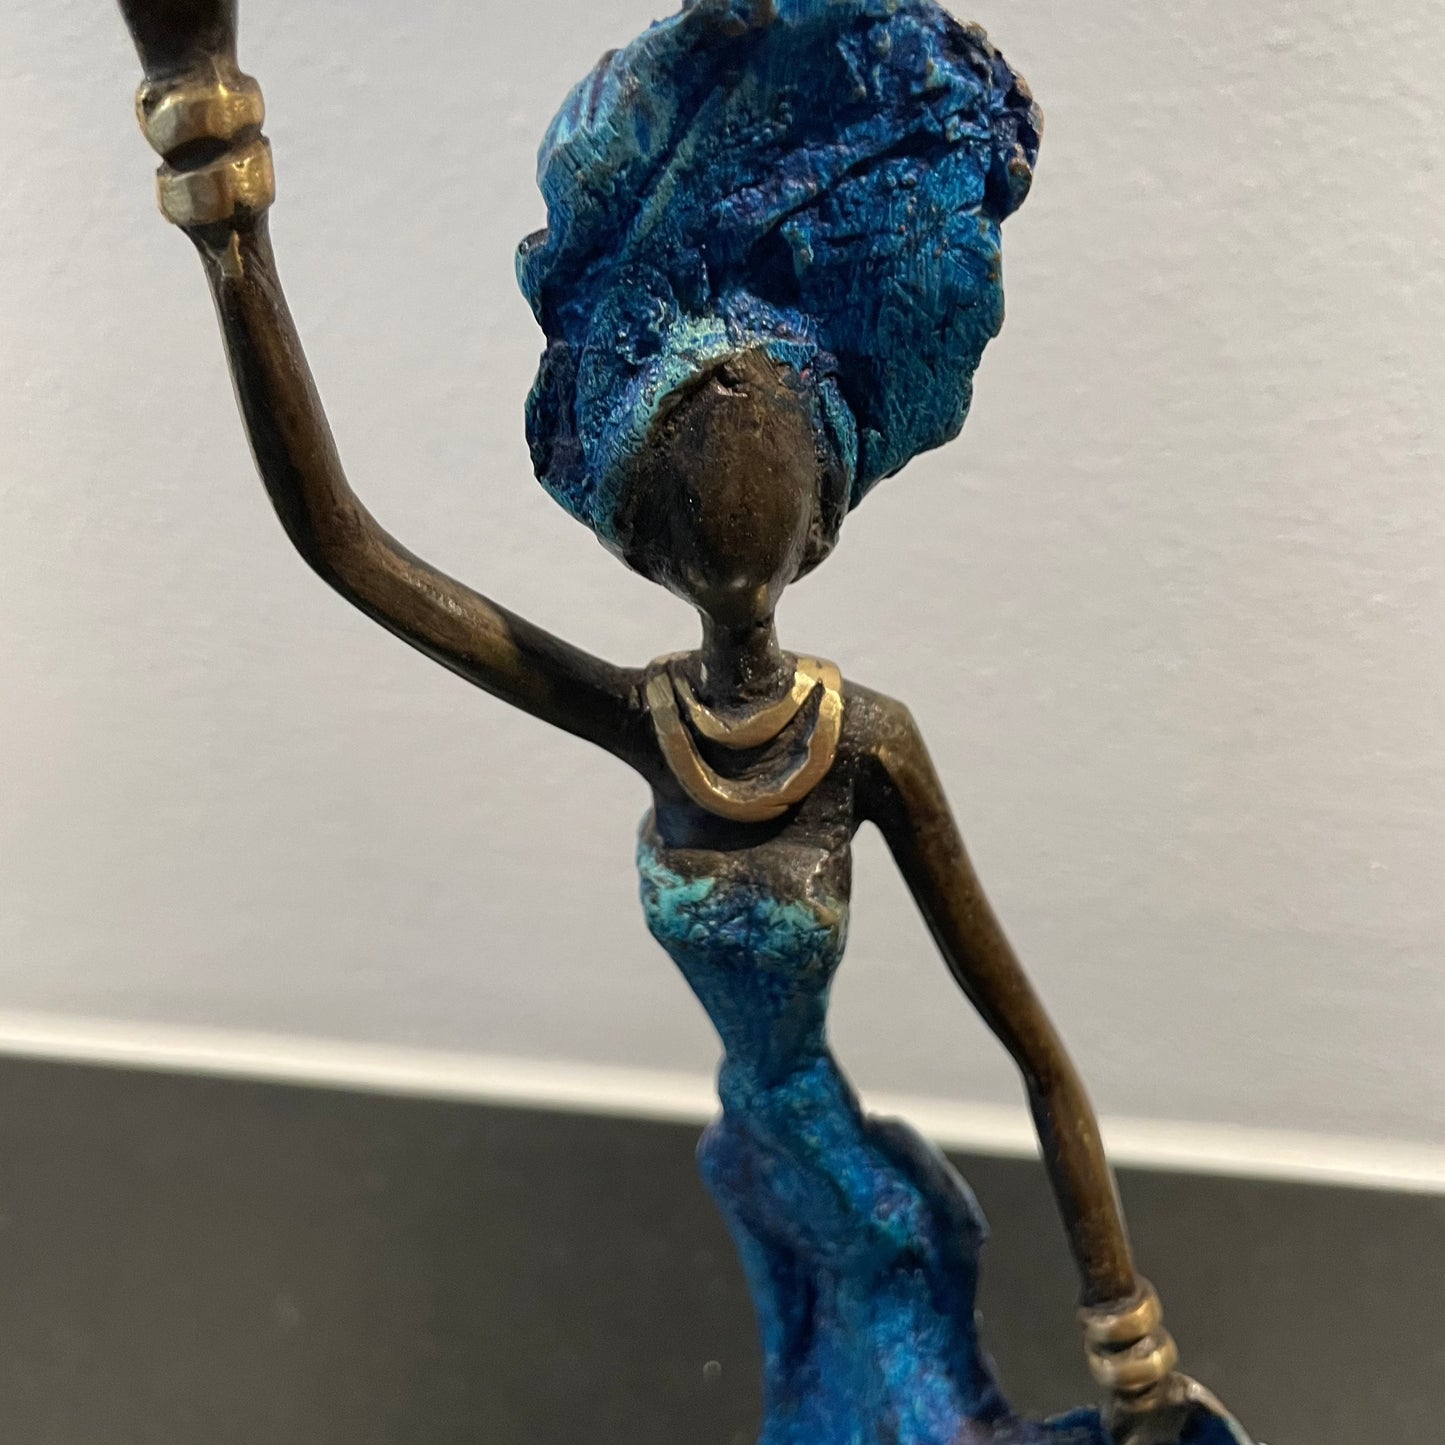 Brass art, Power woman 21-25 cm in recycled brass. Made Fair Trade in Burkina Faso